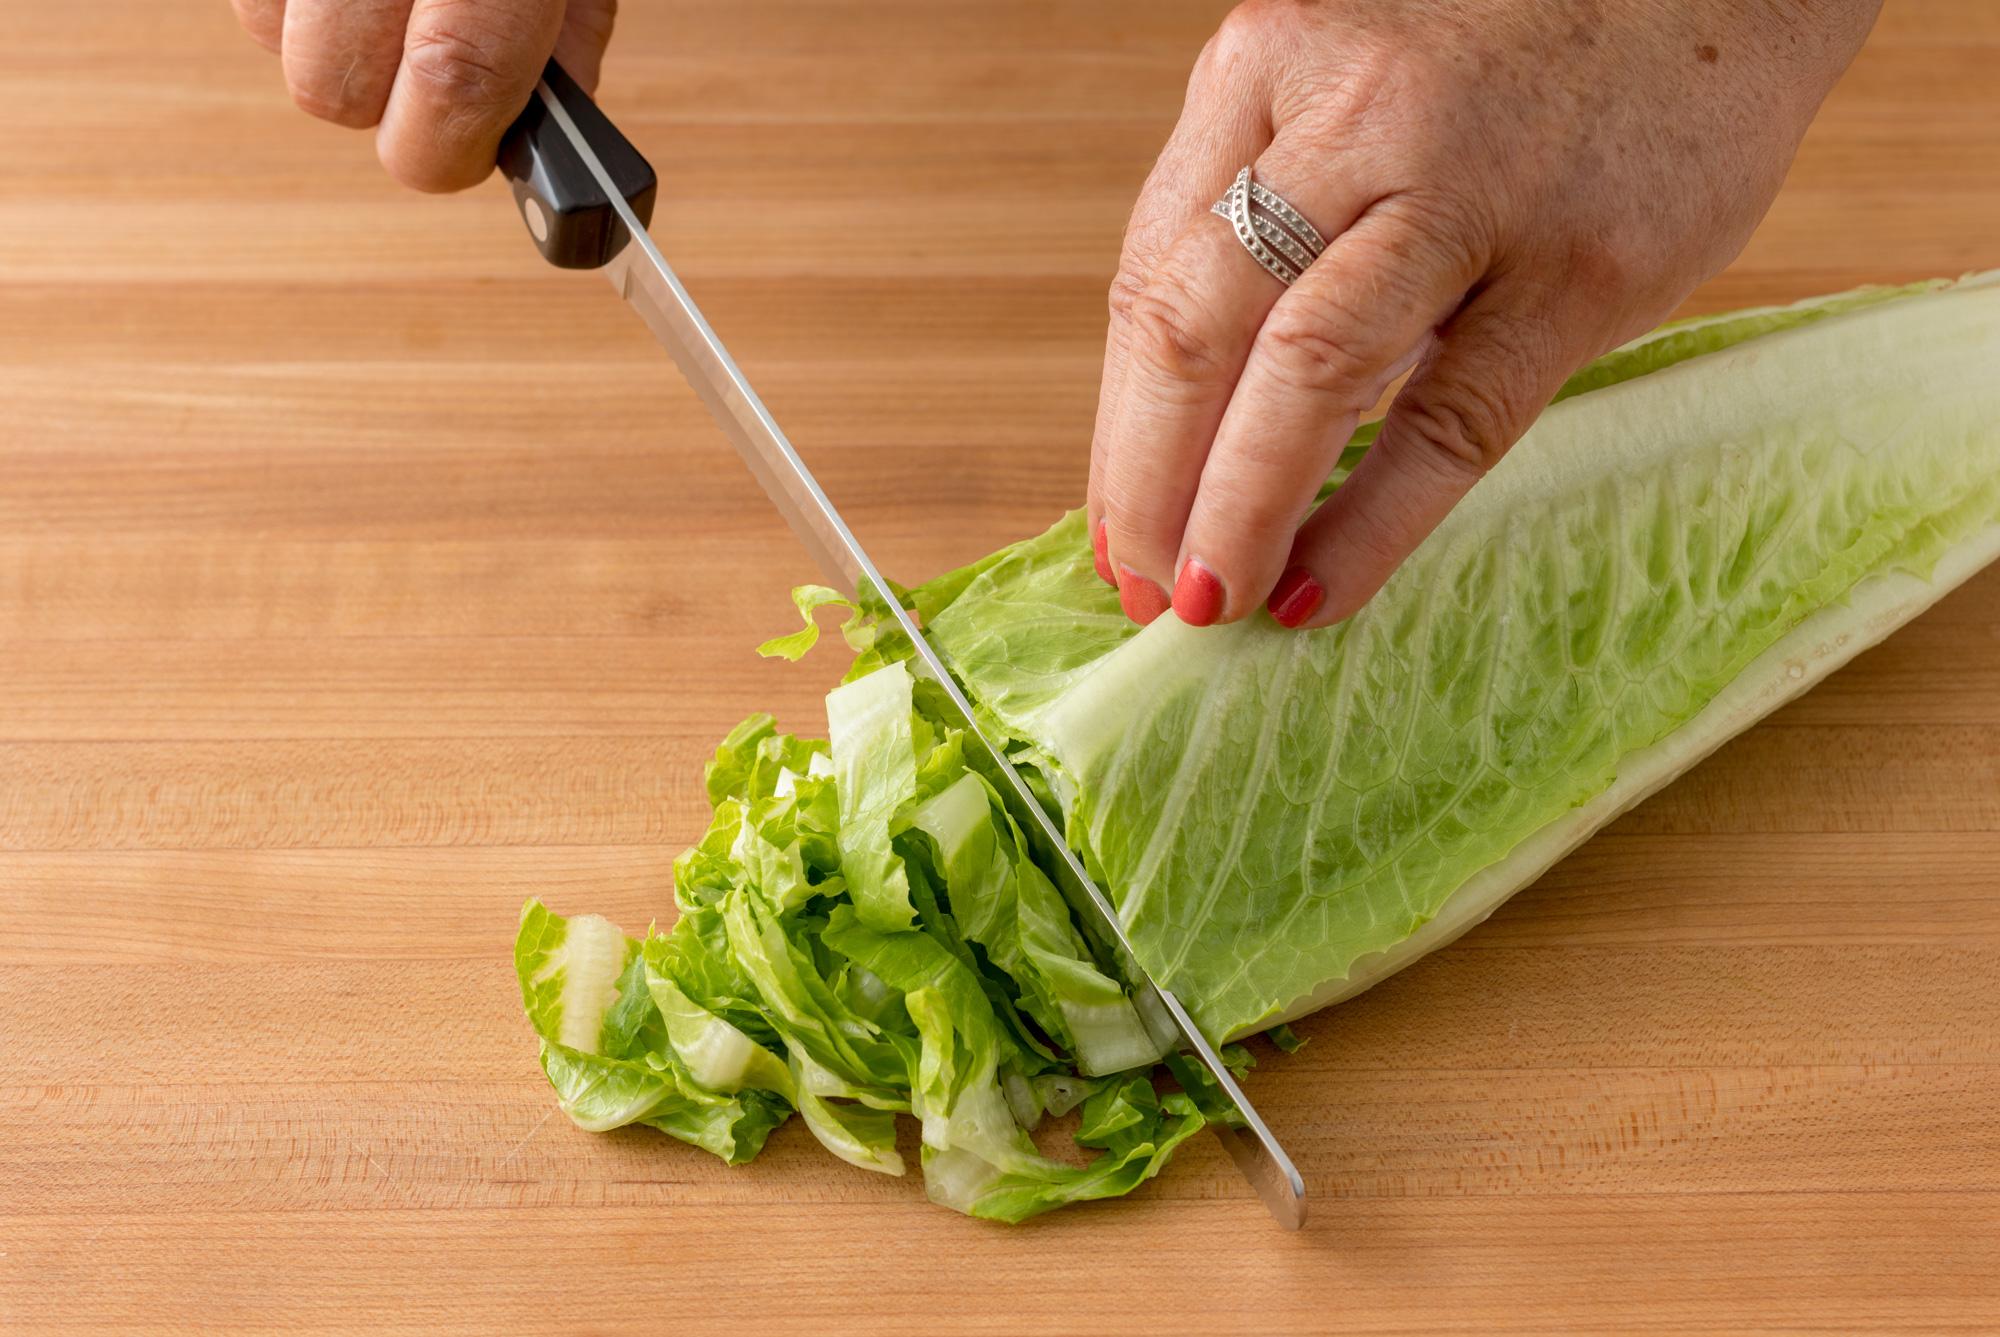 Shredding the romaine lettuce with a Petite Slicer.